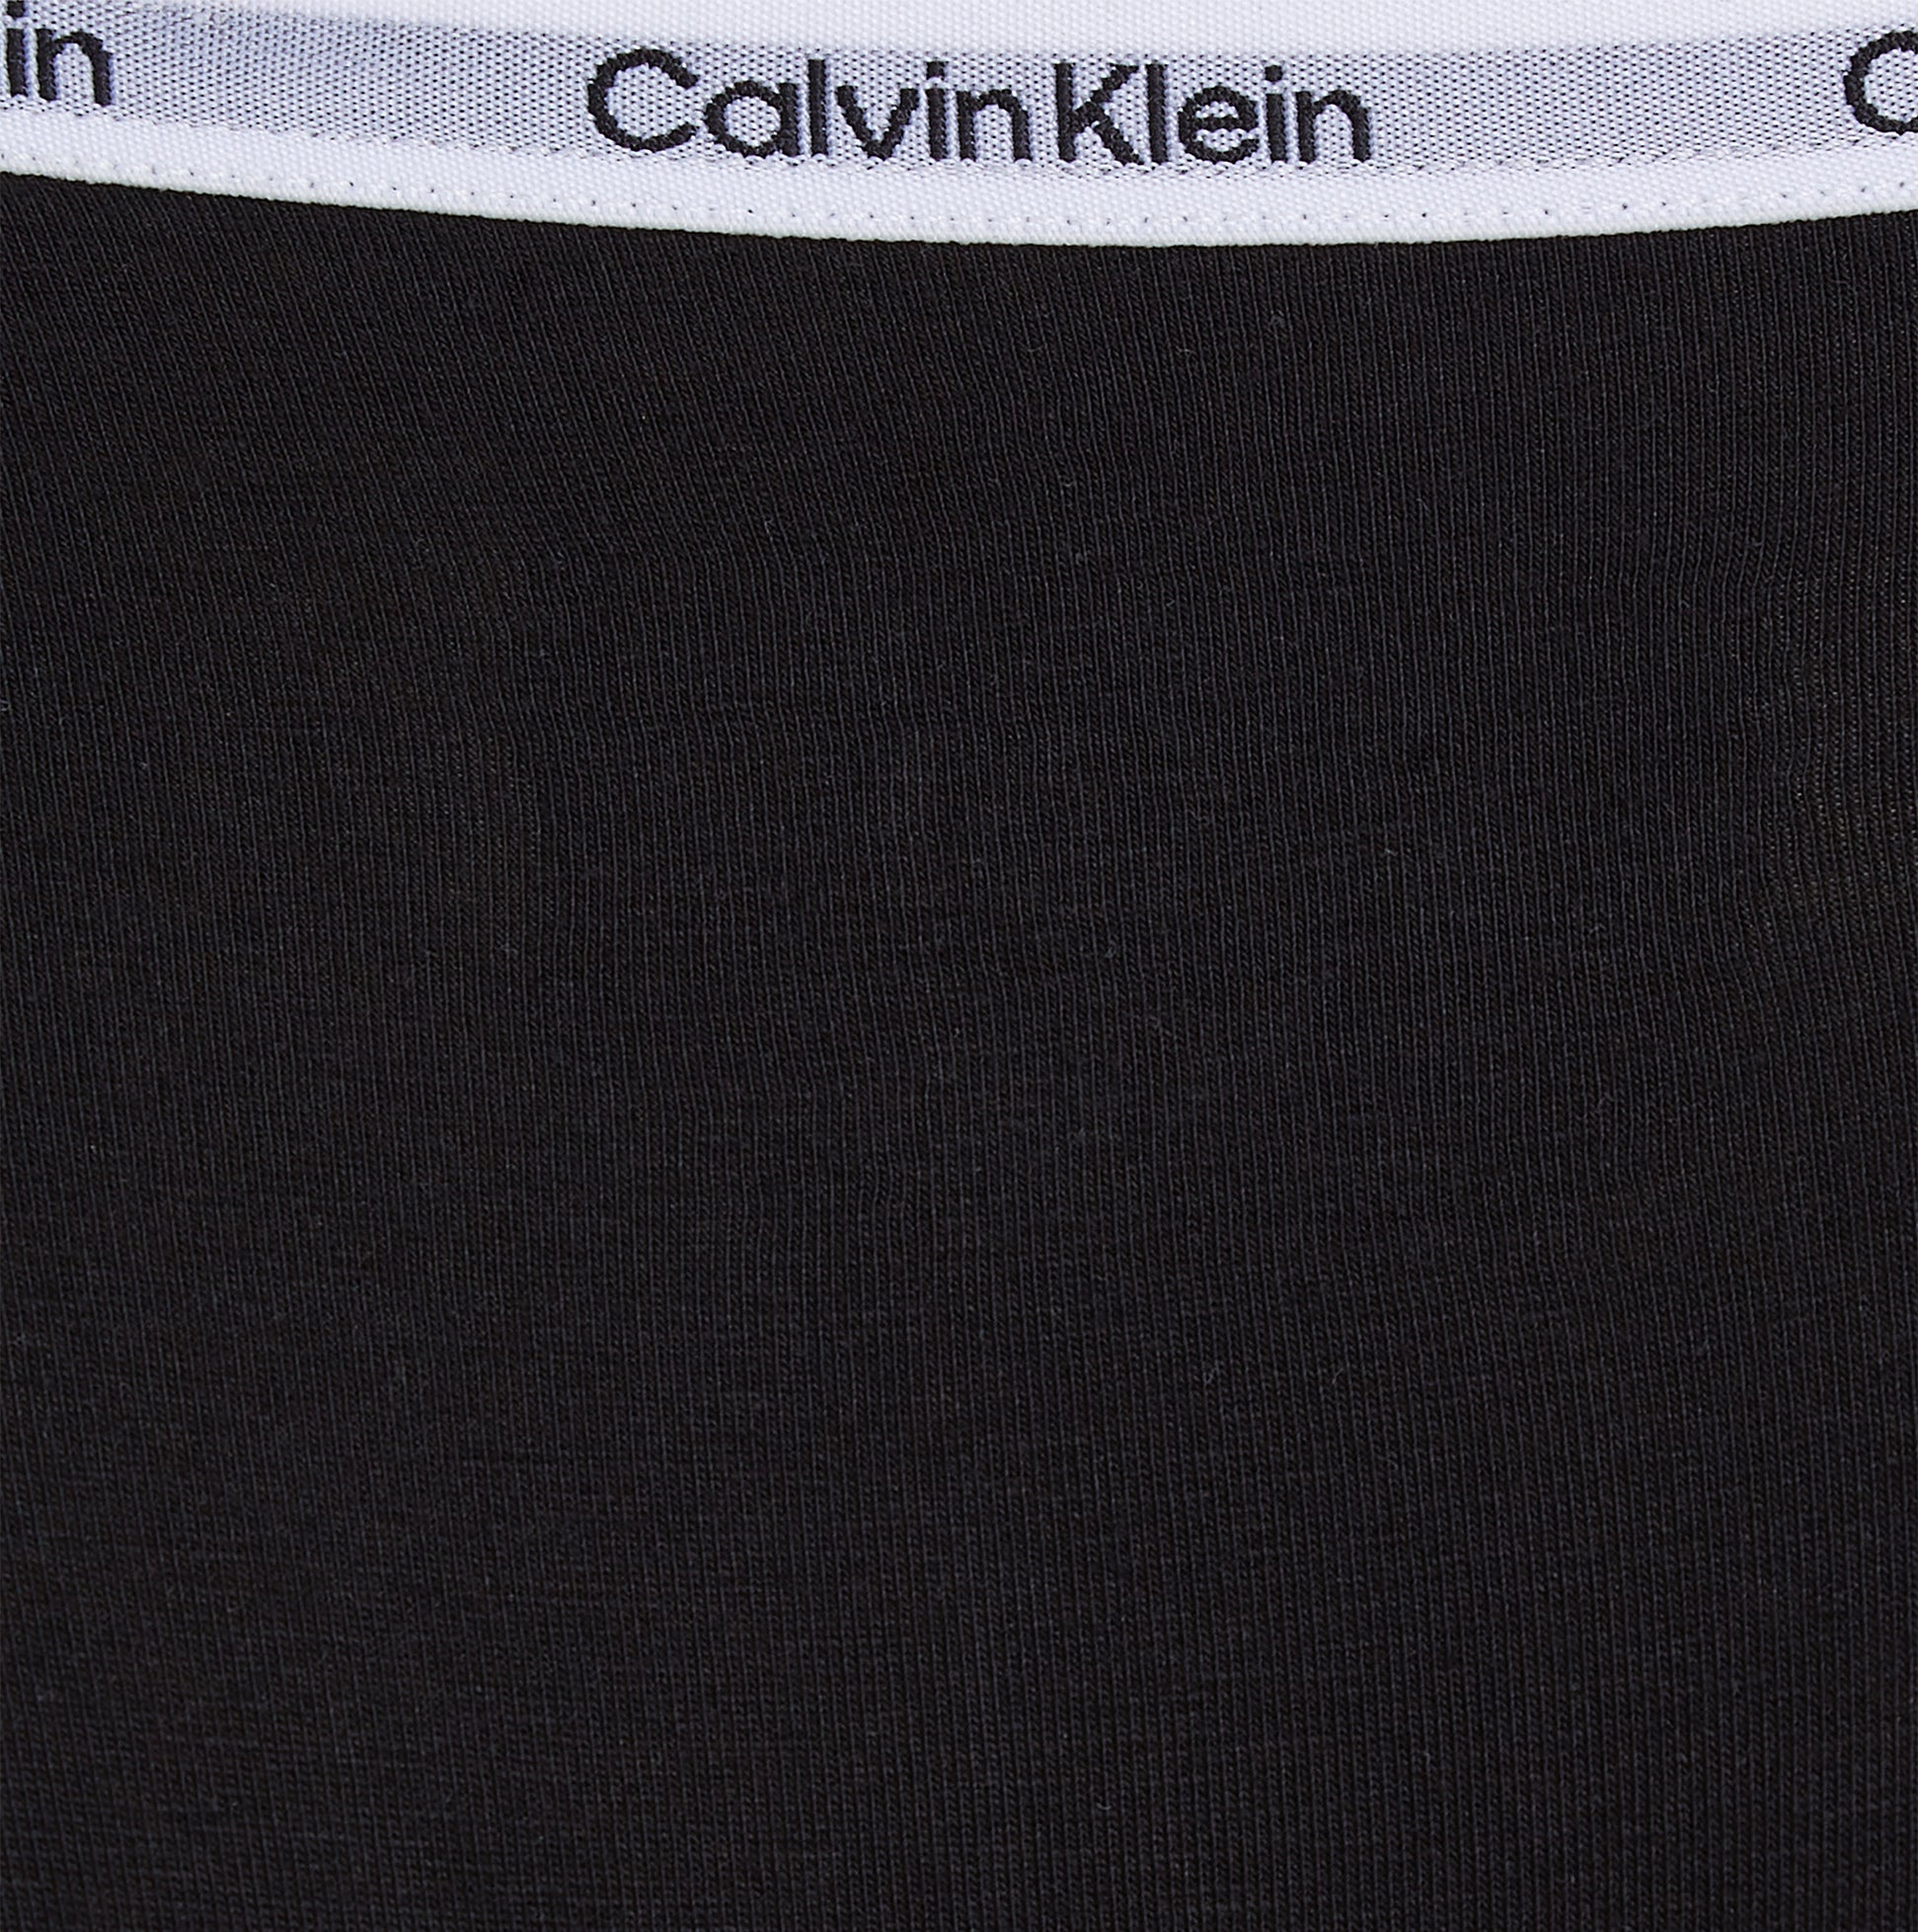 CalvinKlein-[000QD5207EMPI]-BlackWhiteGreyHeather-4.jpg